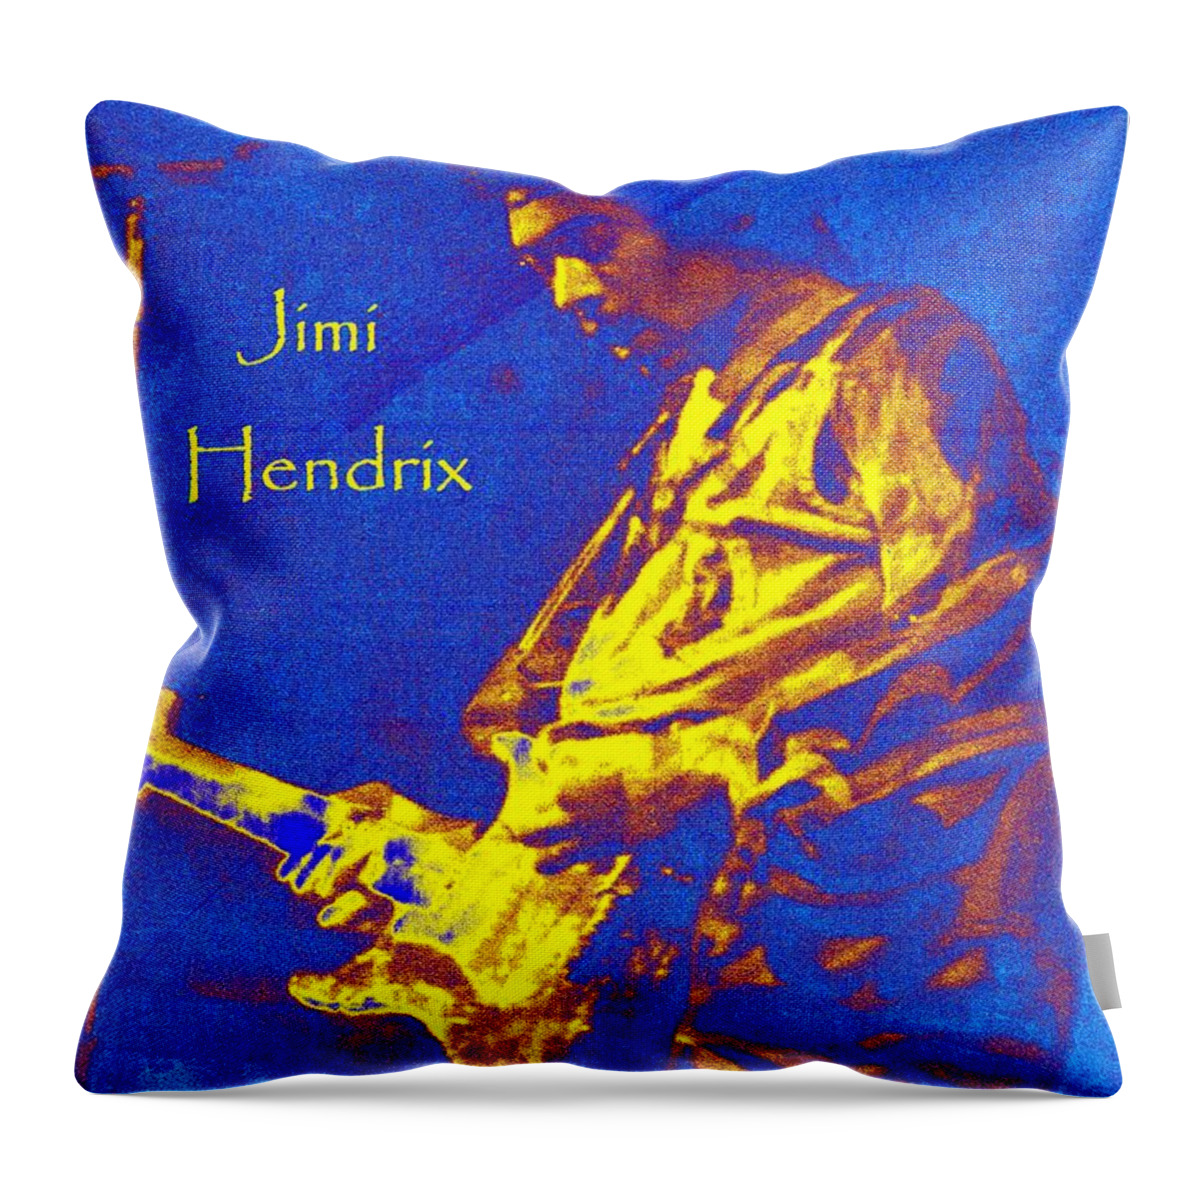 Jimi Hendrix Throw Pillow featuring the digital art Hey Joe by Larry Beat